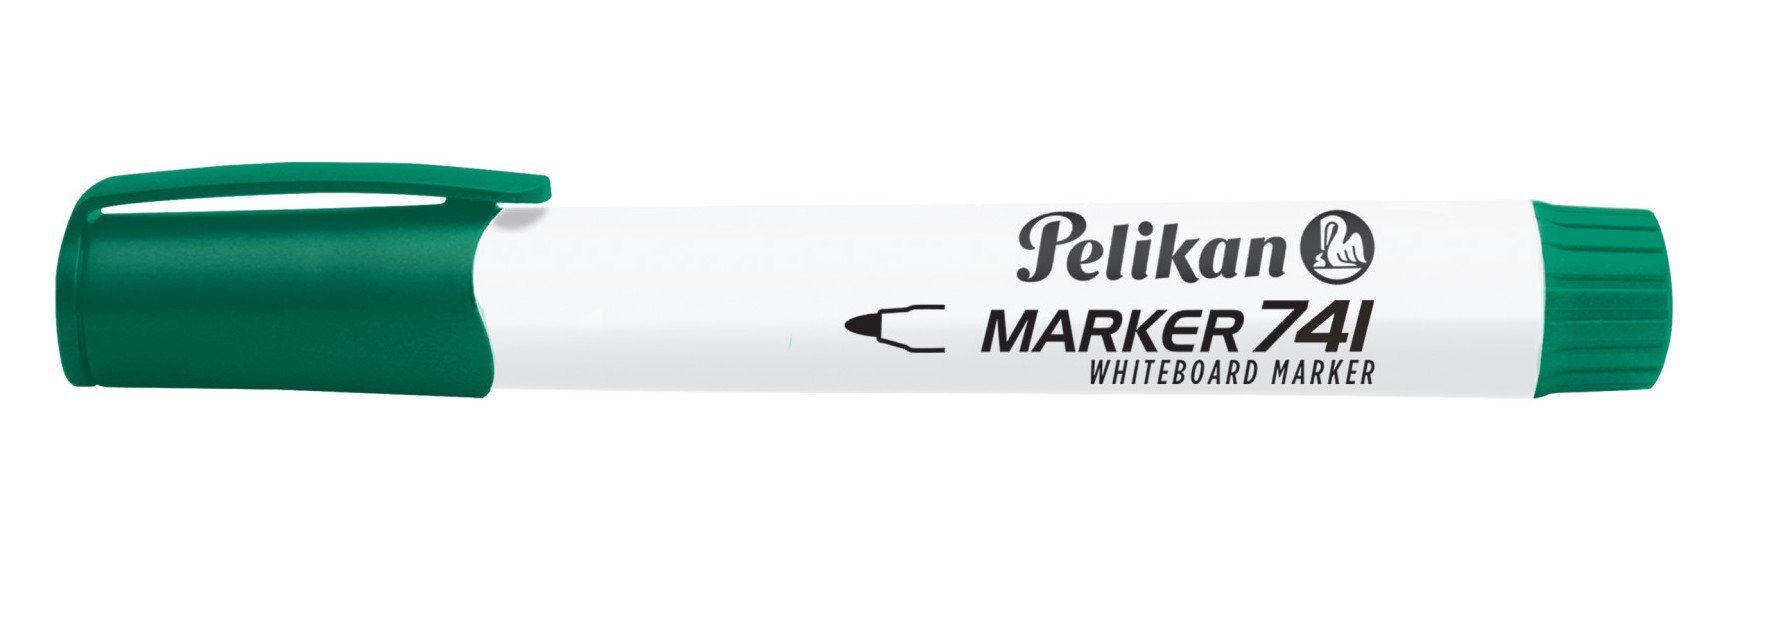 Pelikan Marker Pelikan Whiteboard Marker 741 grün